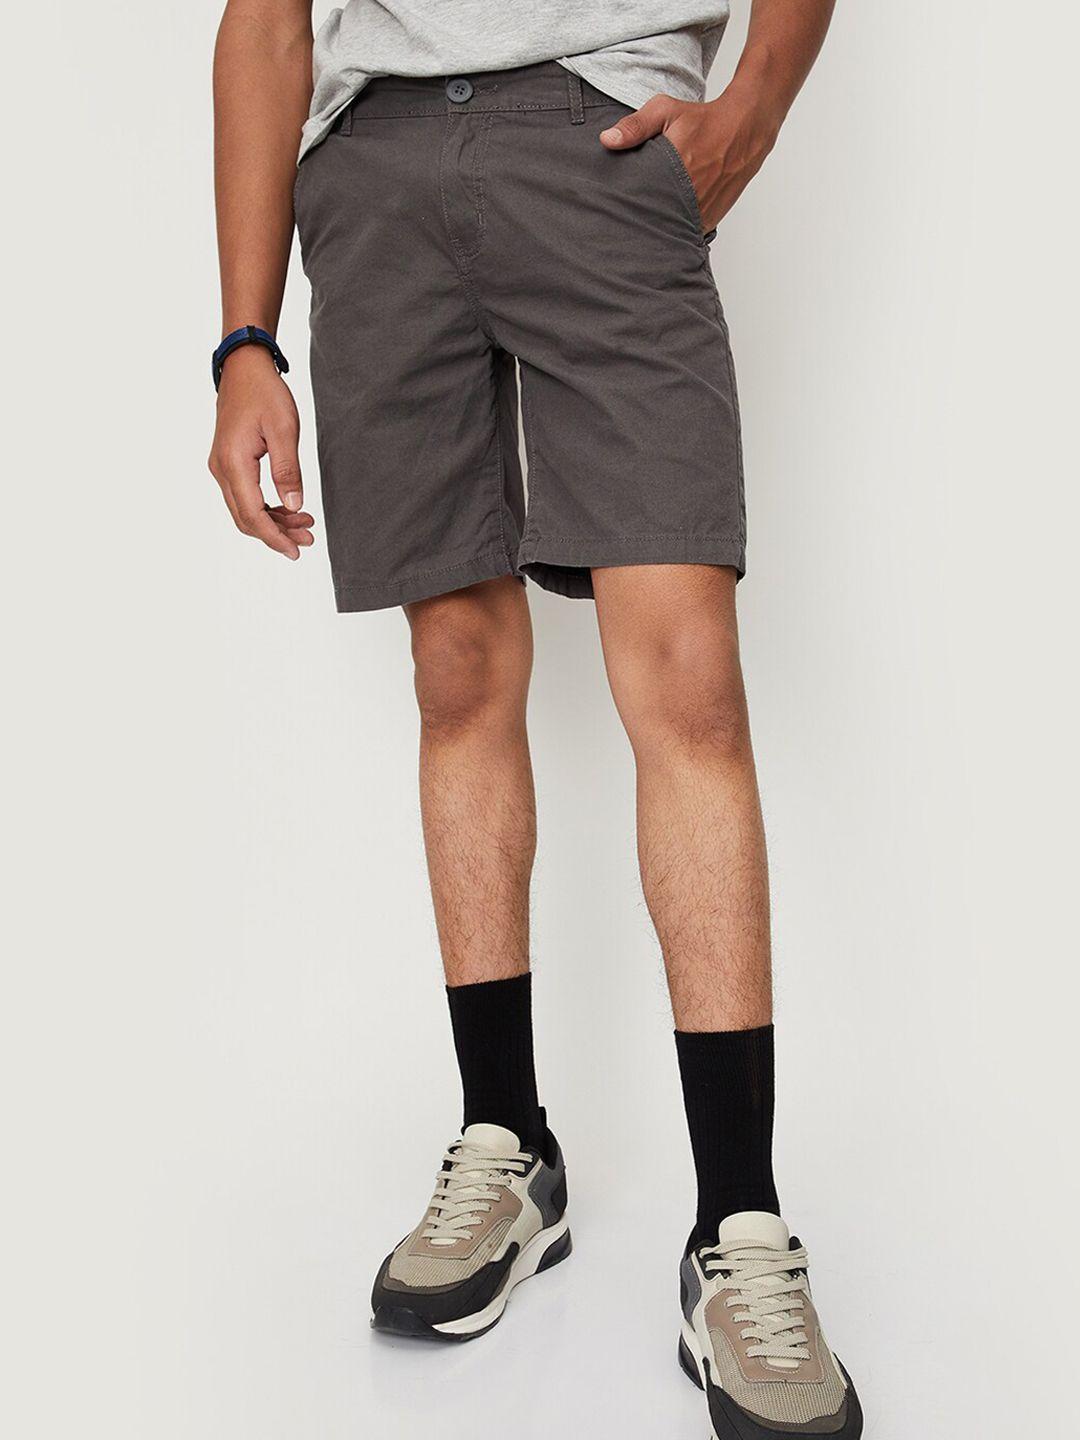 max-boys-mid-rise-pure-cotton-shorts